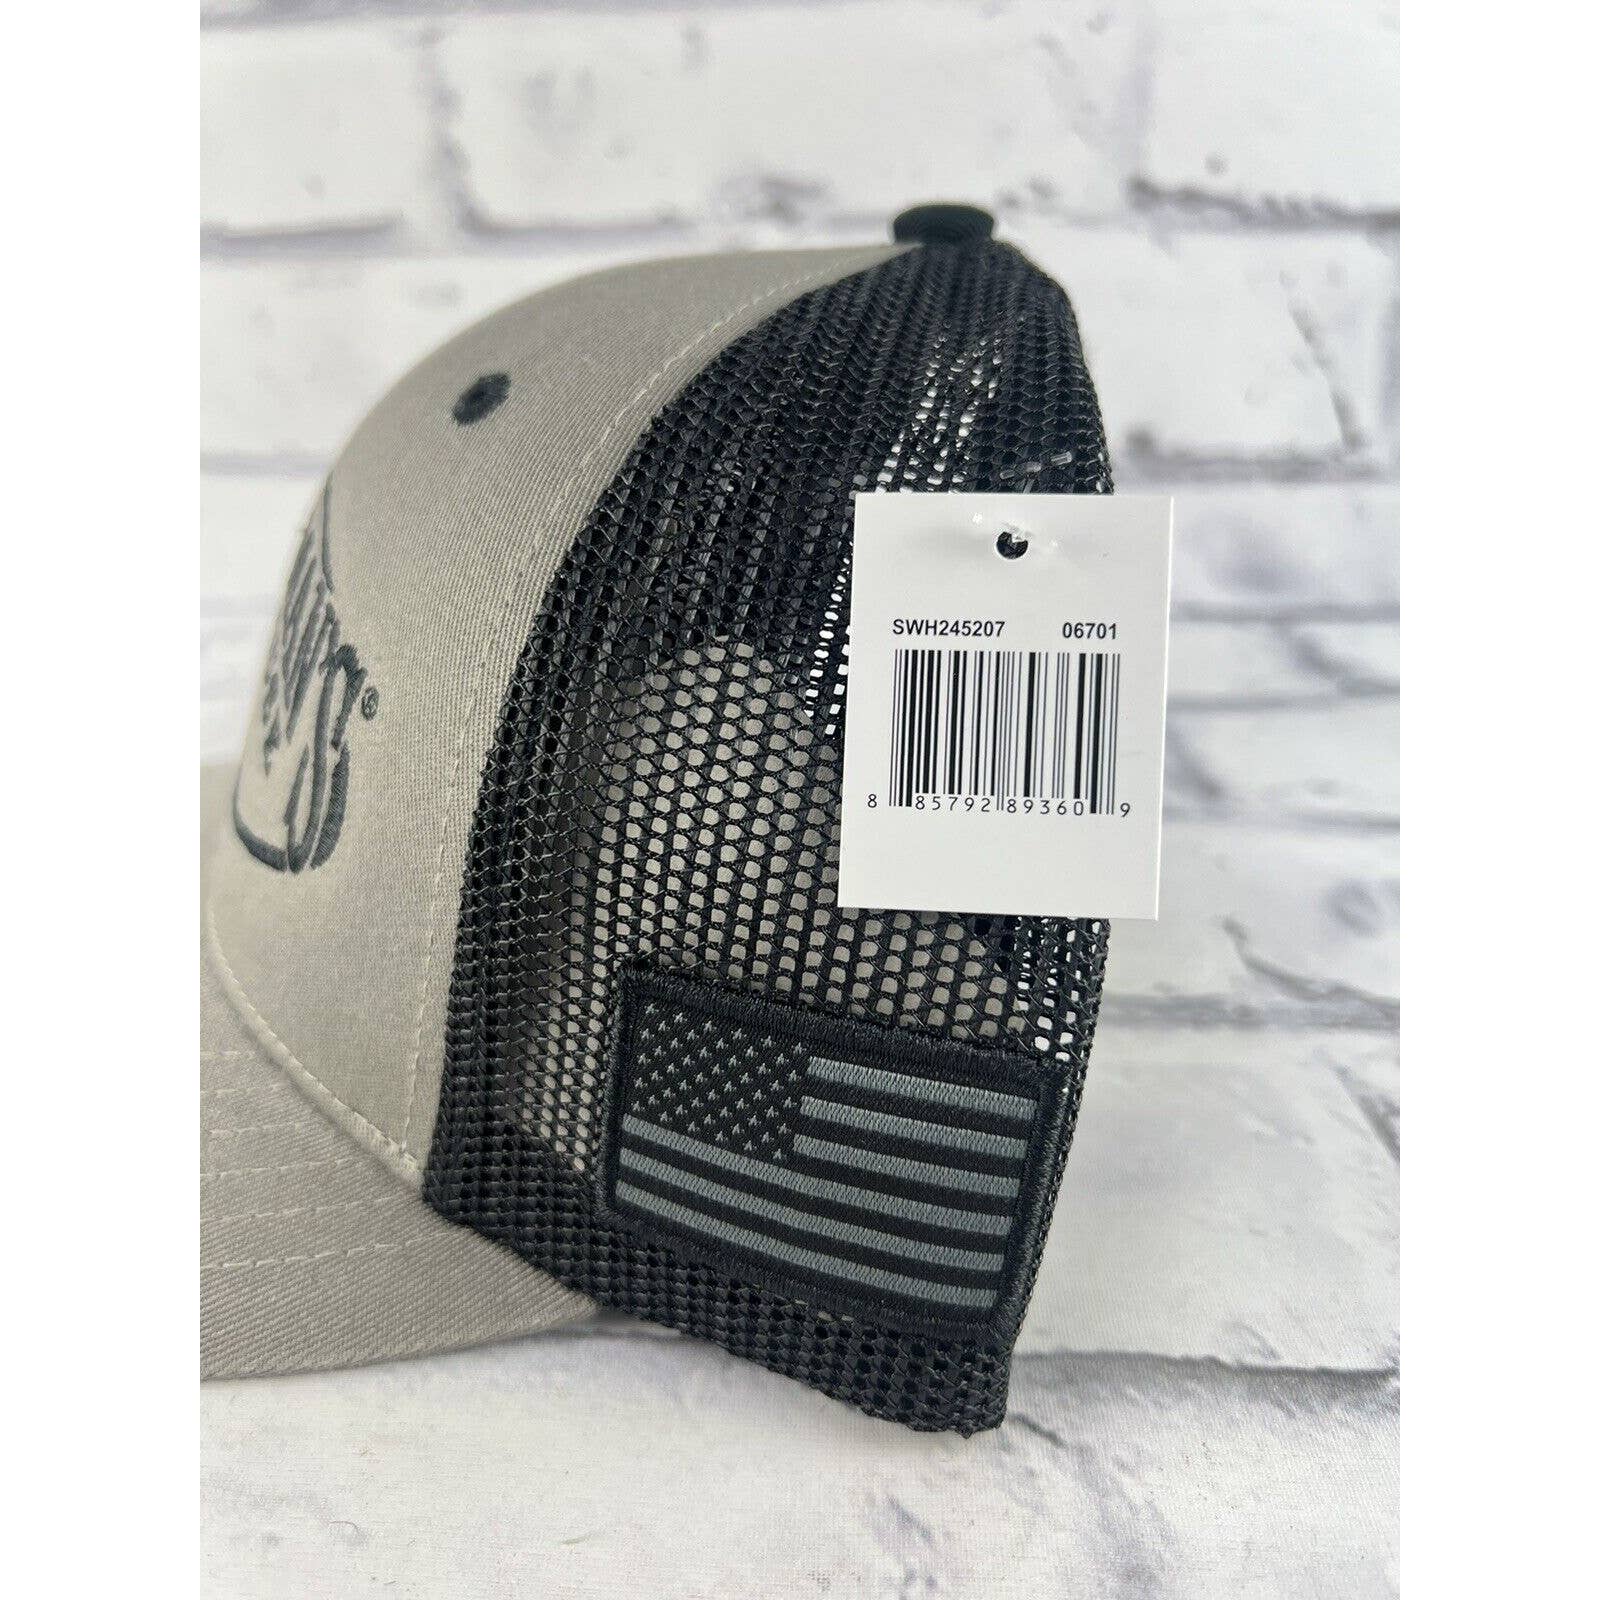 Sportsman’s Warehouse Trucker Hat Gray Black Mesh Adjustable Outdoorsman Cap